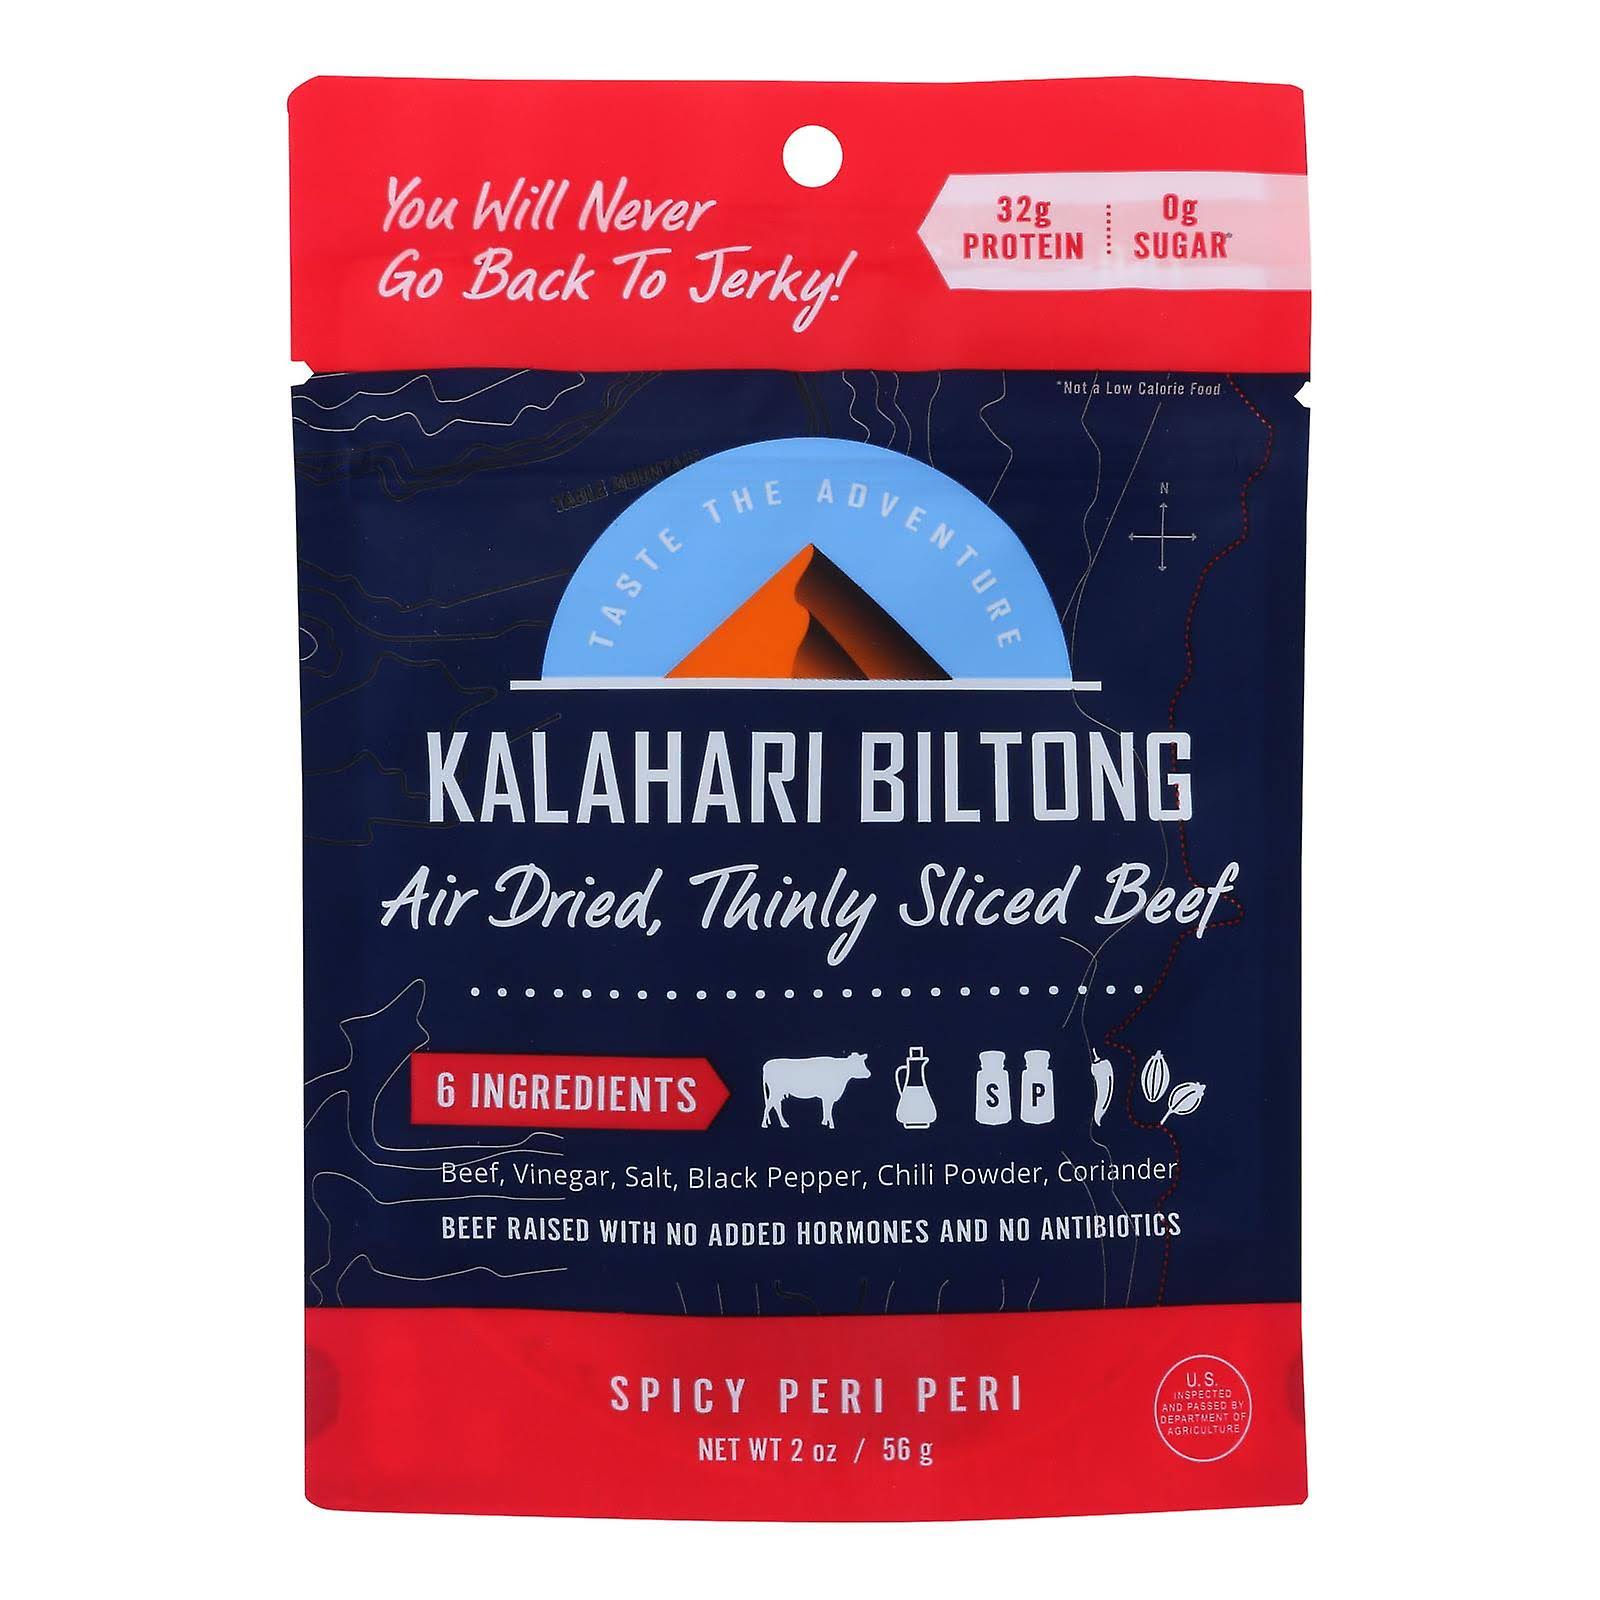 Kalahari Biltong Spicy Peri Peri Air-Dried Sliced Beef - Pack of 8 - 2 oz